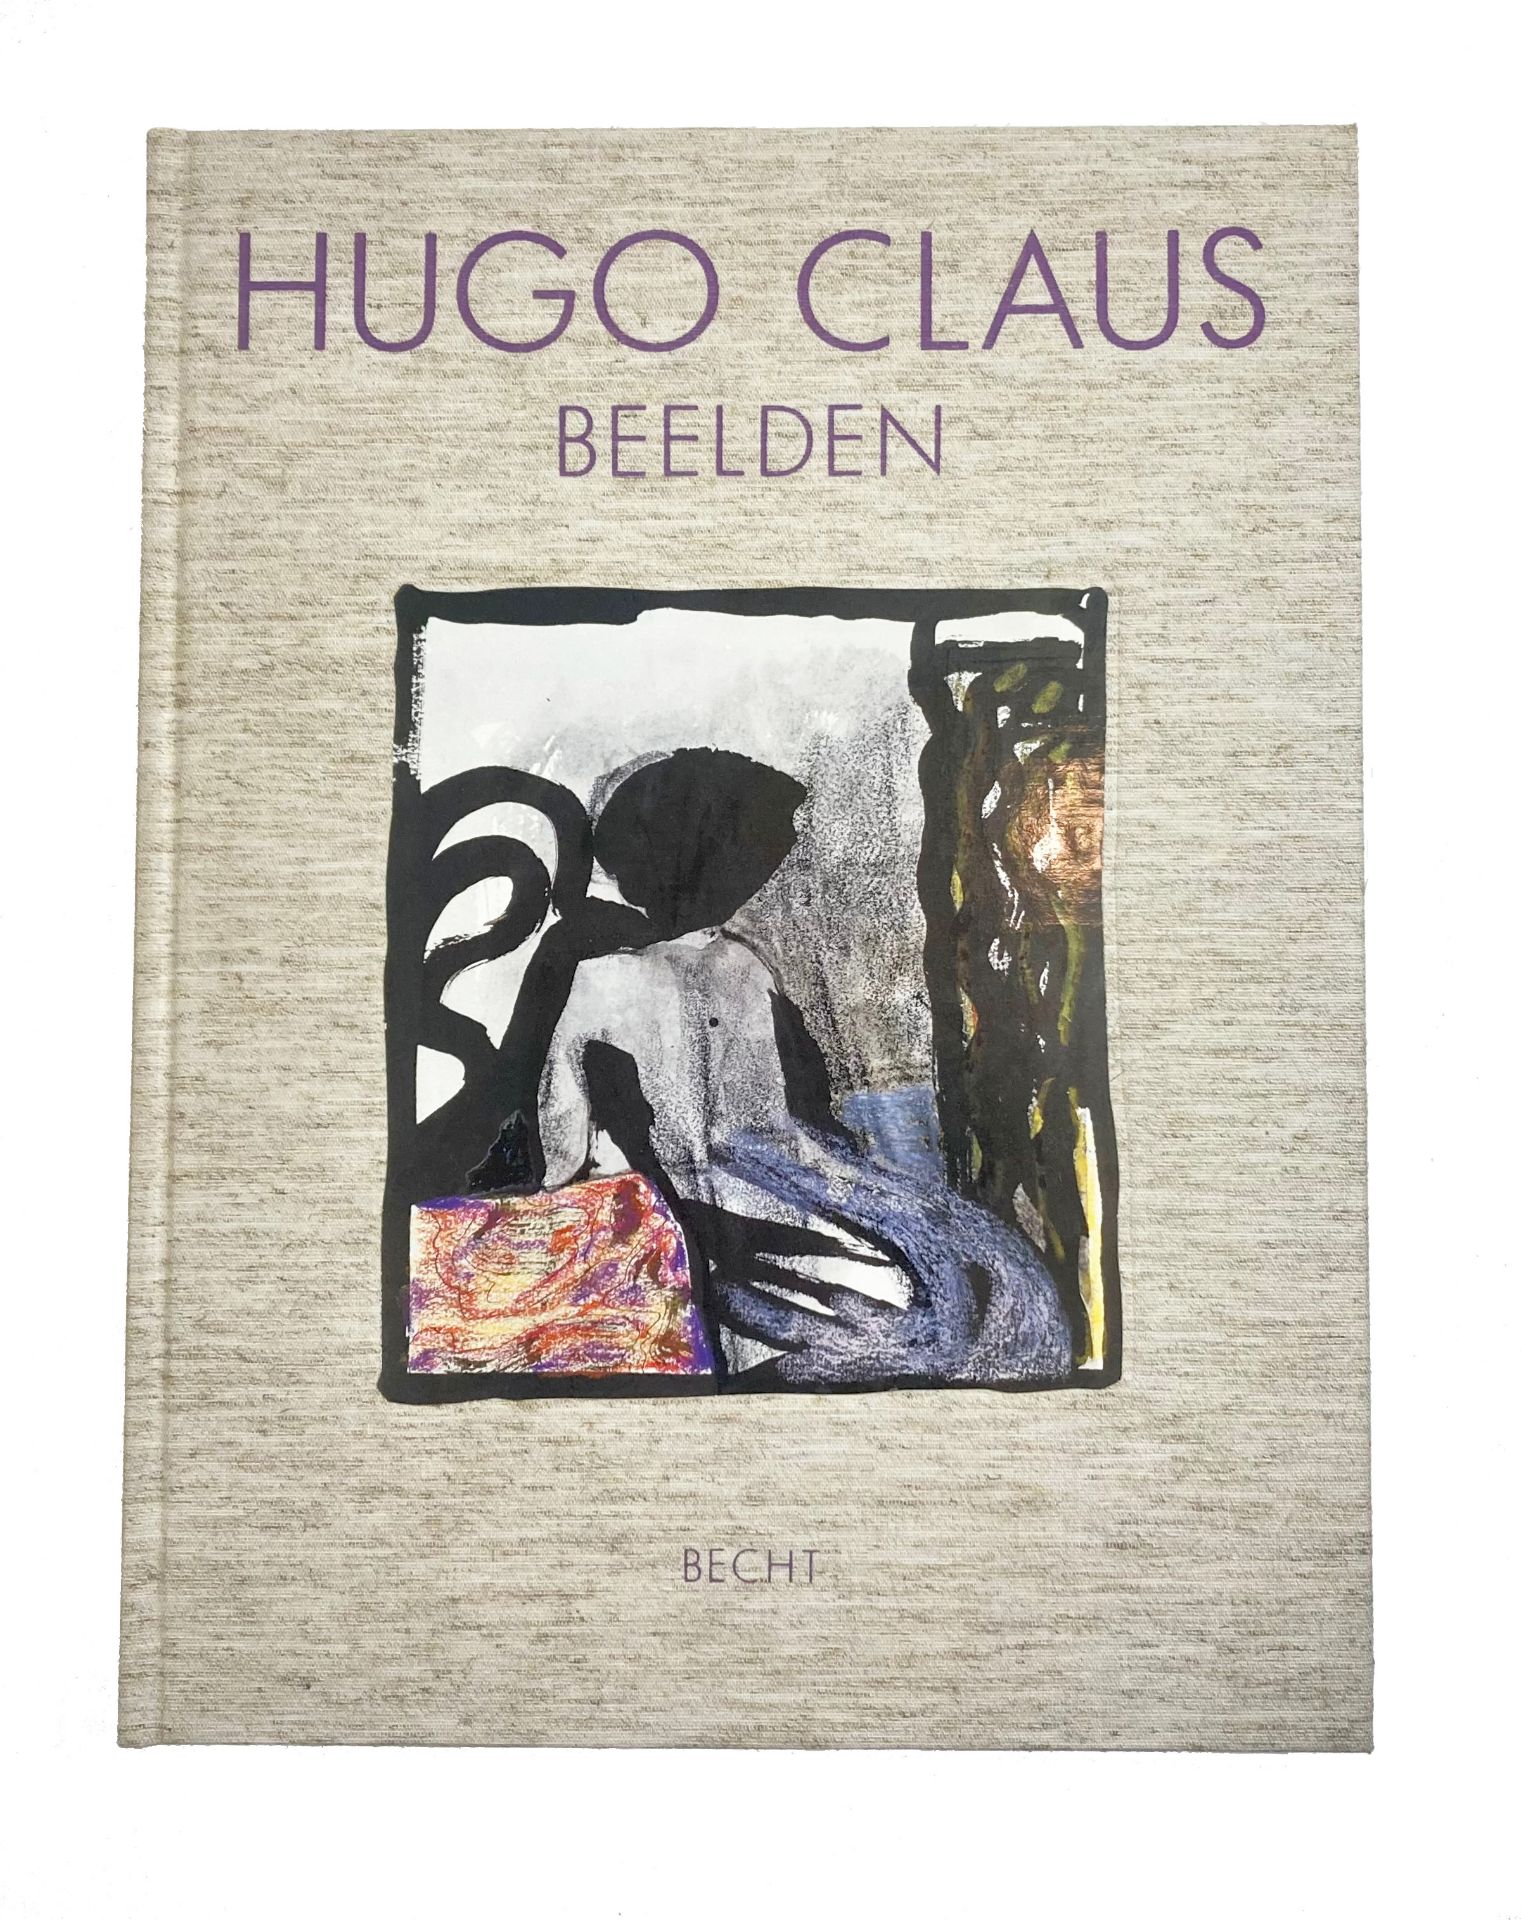 CLAUS, H. Beelden. Haarlem, (1988). 253 pp. W. num. cold. reprods. of